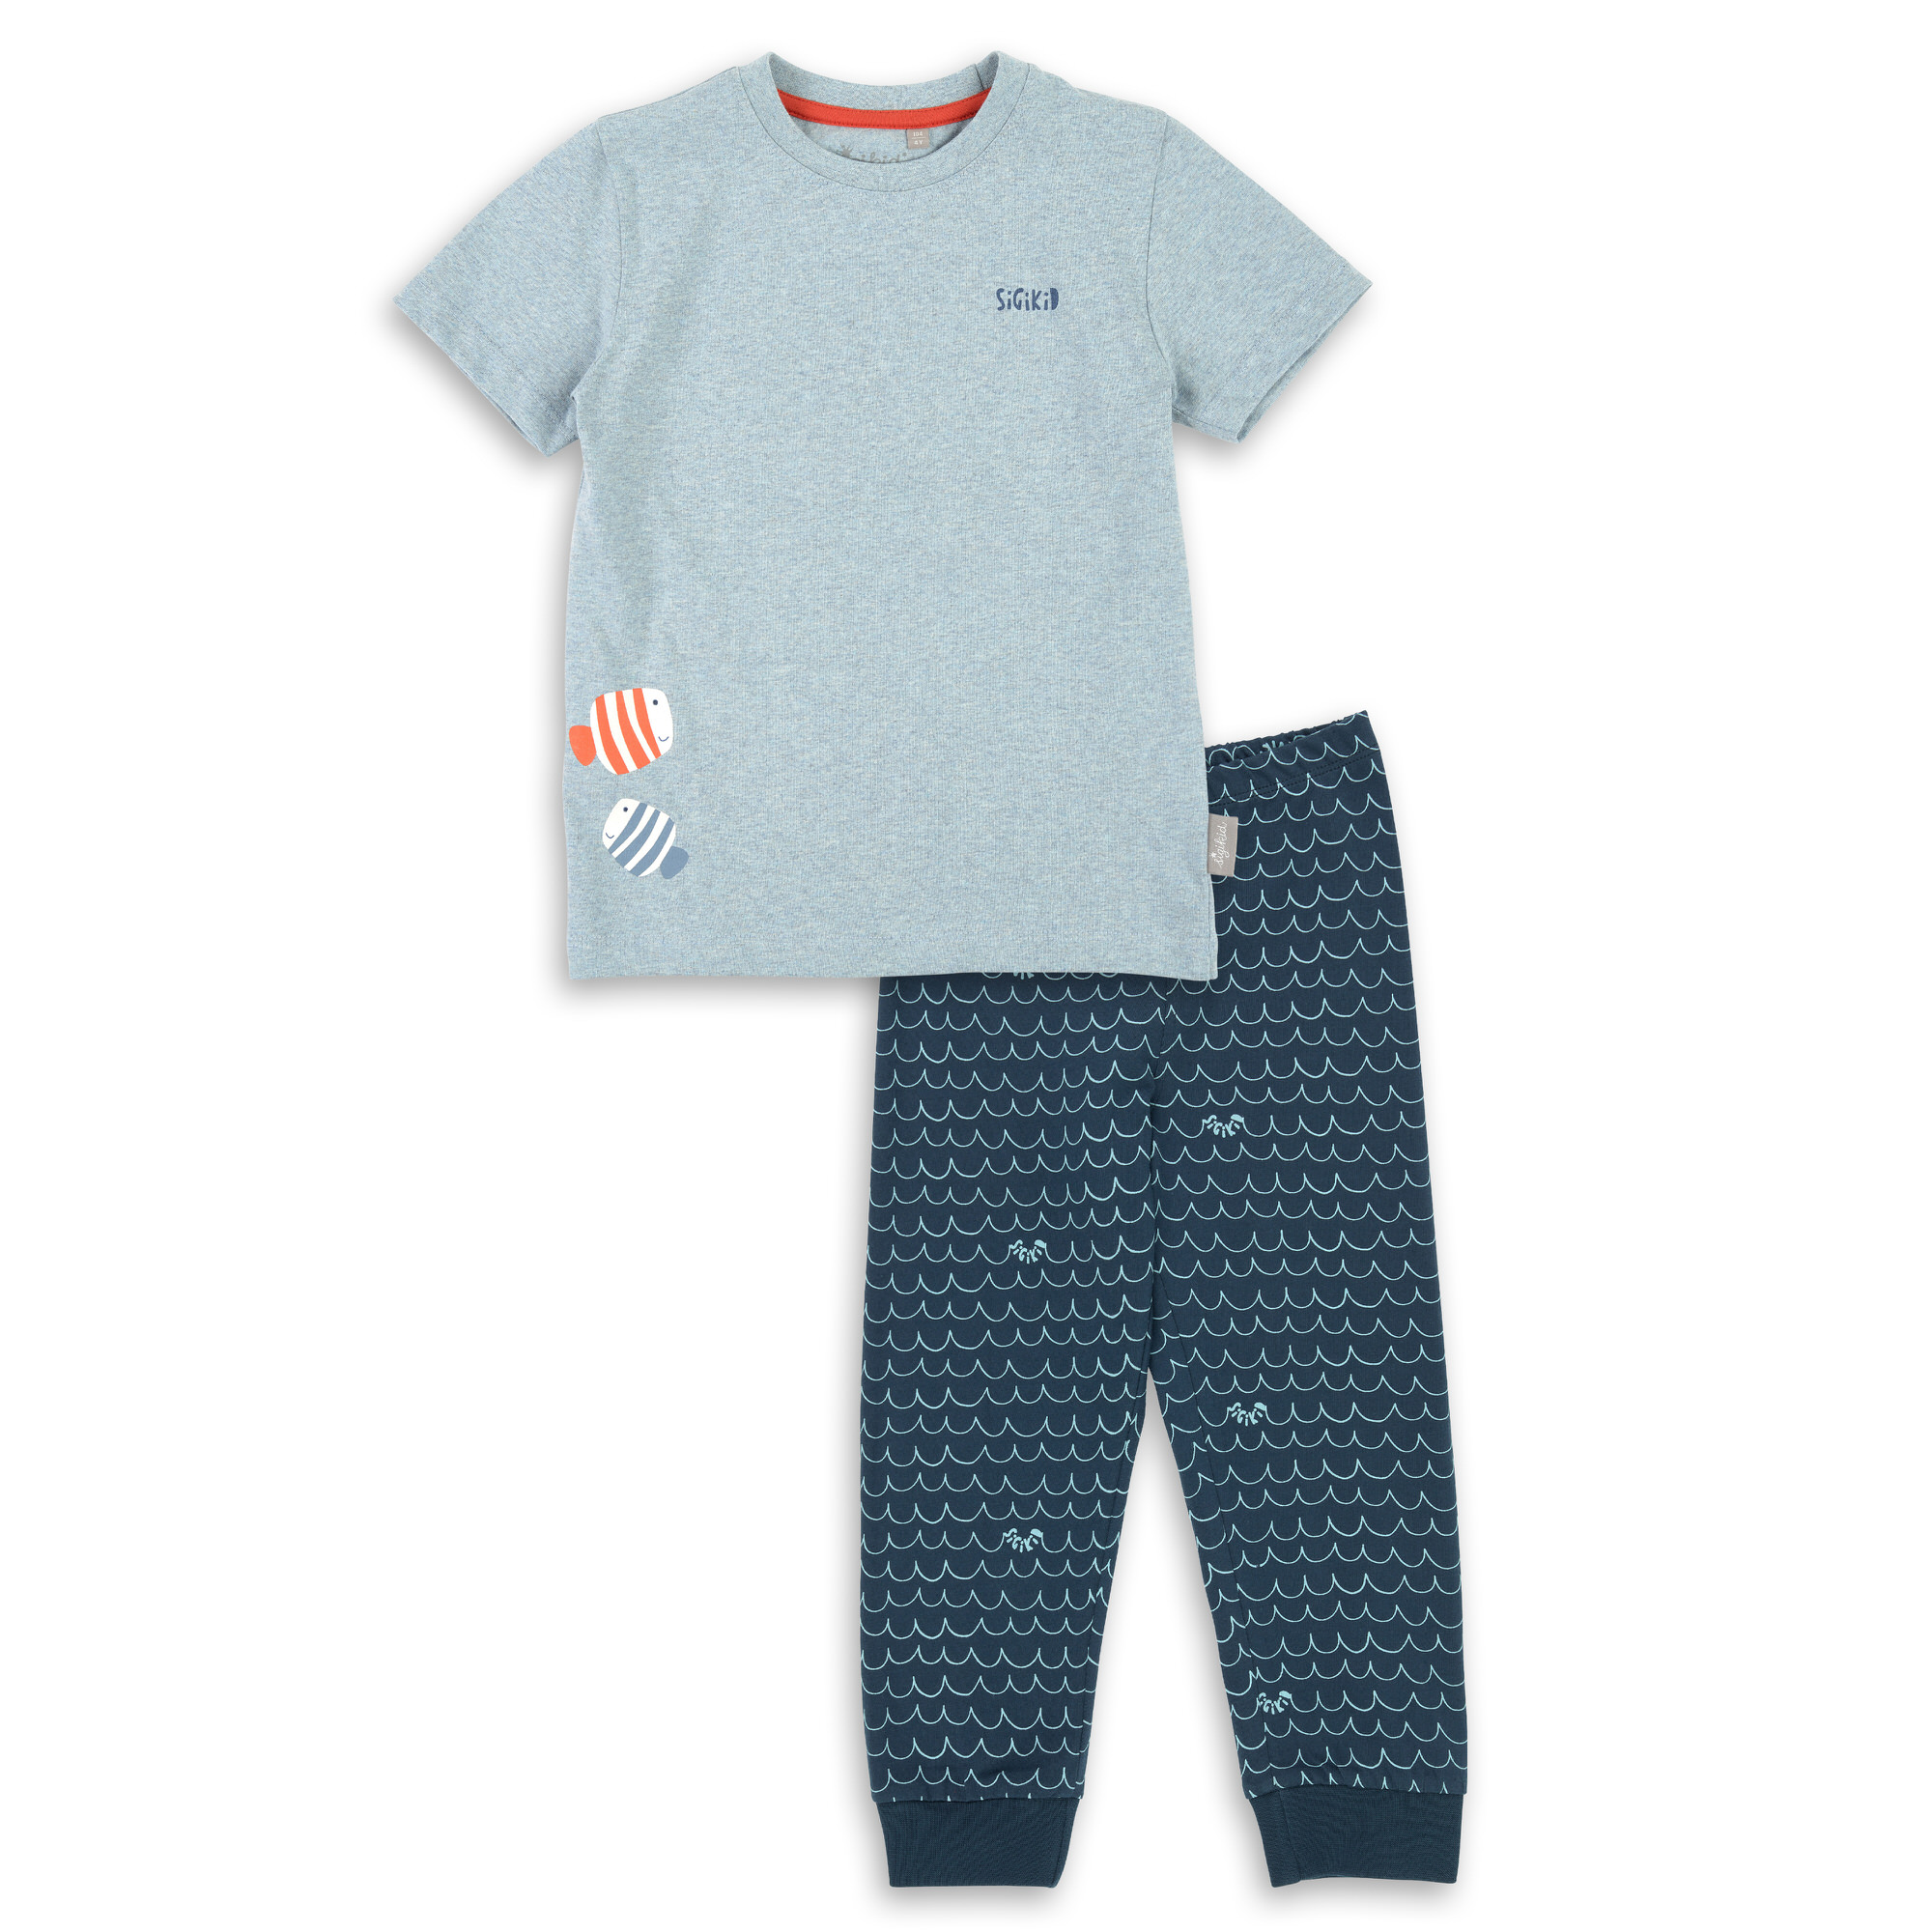 Children's two-piece pajamas waves, blue